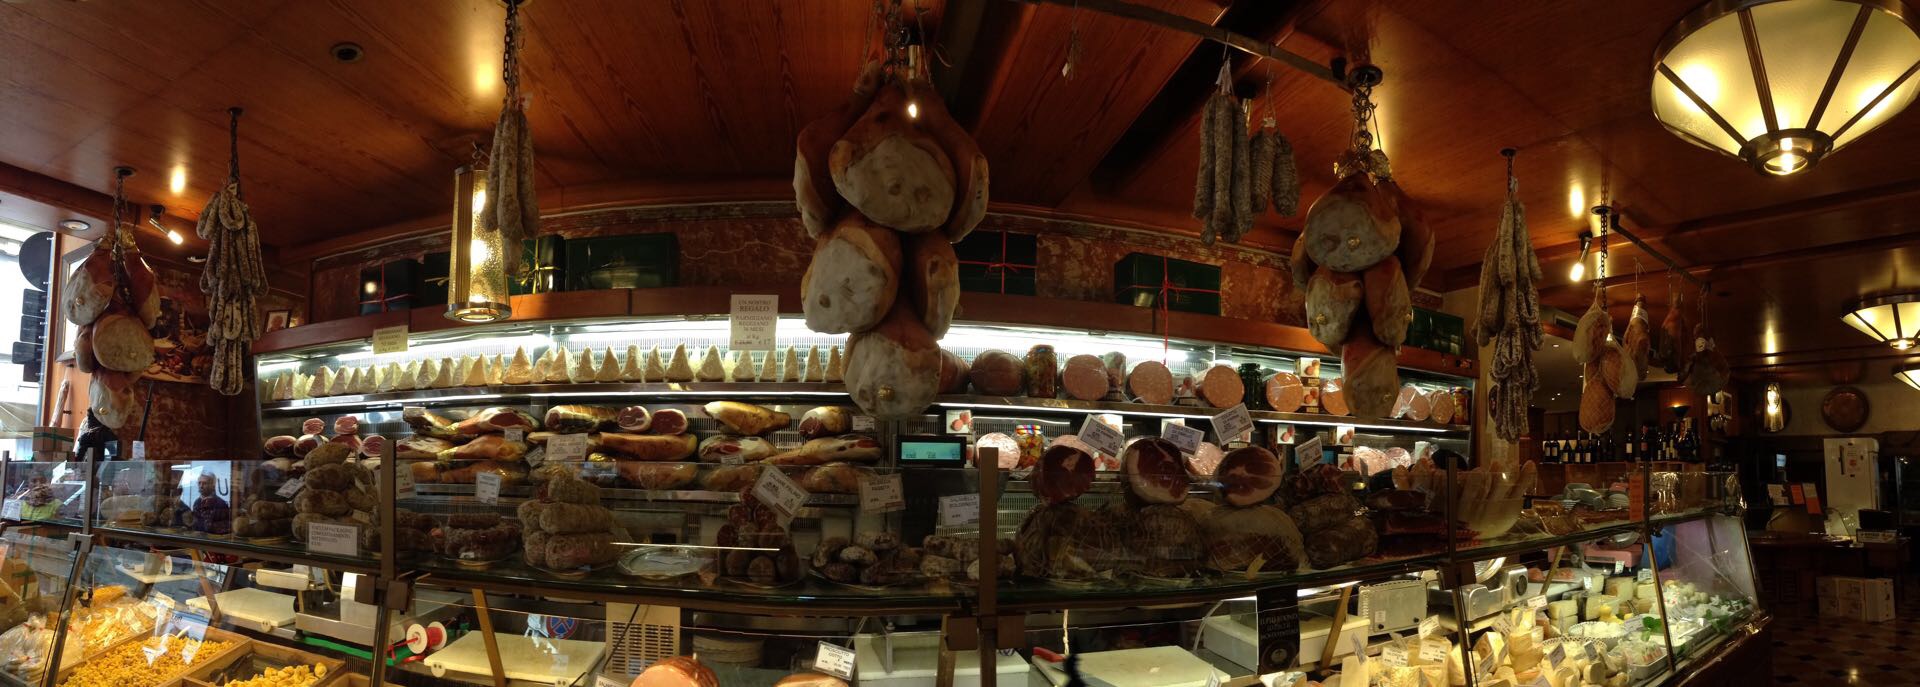 Bologna博洛尼亚，吃货不可错过的胖子之城